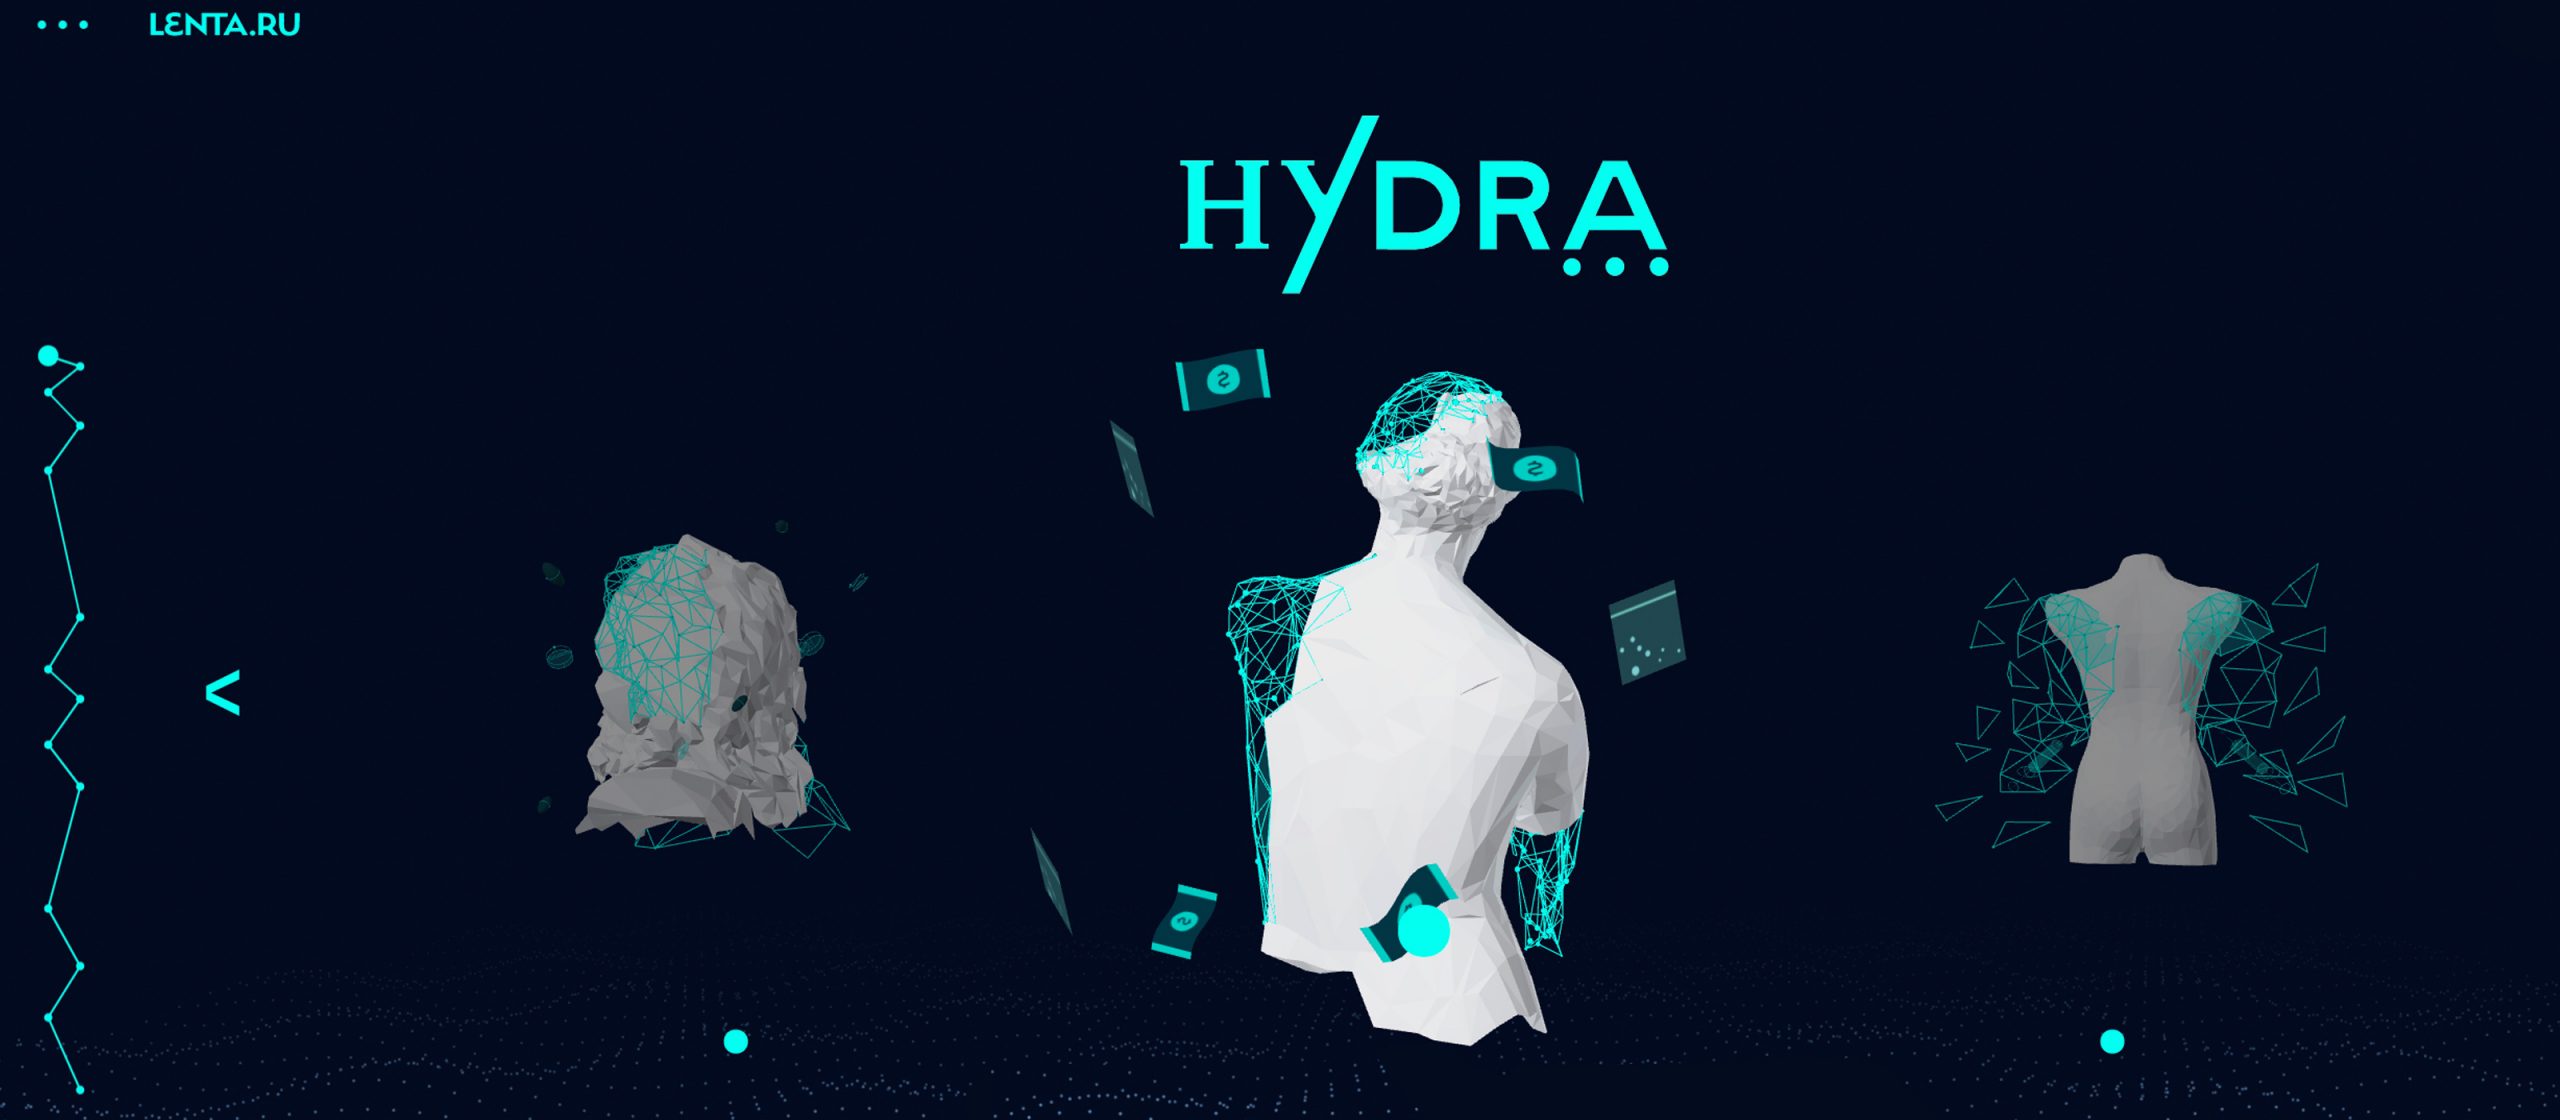 Скачать darknet hidra grams darknet hyrda вход